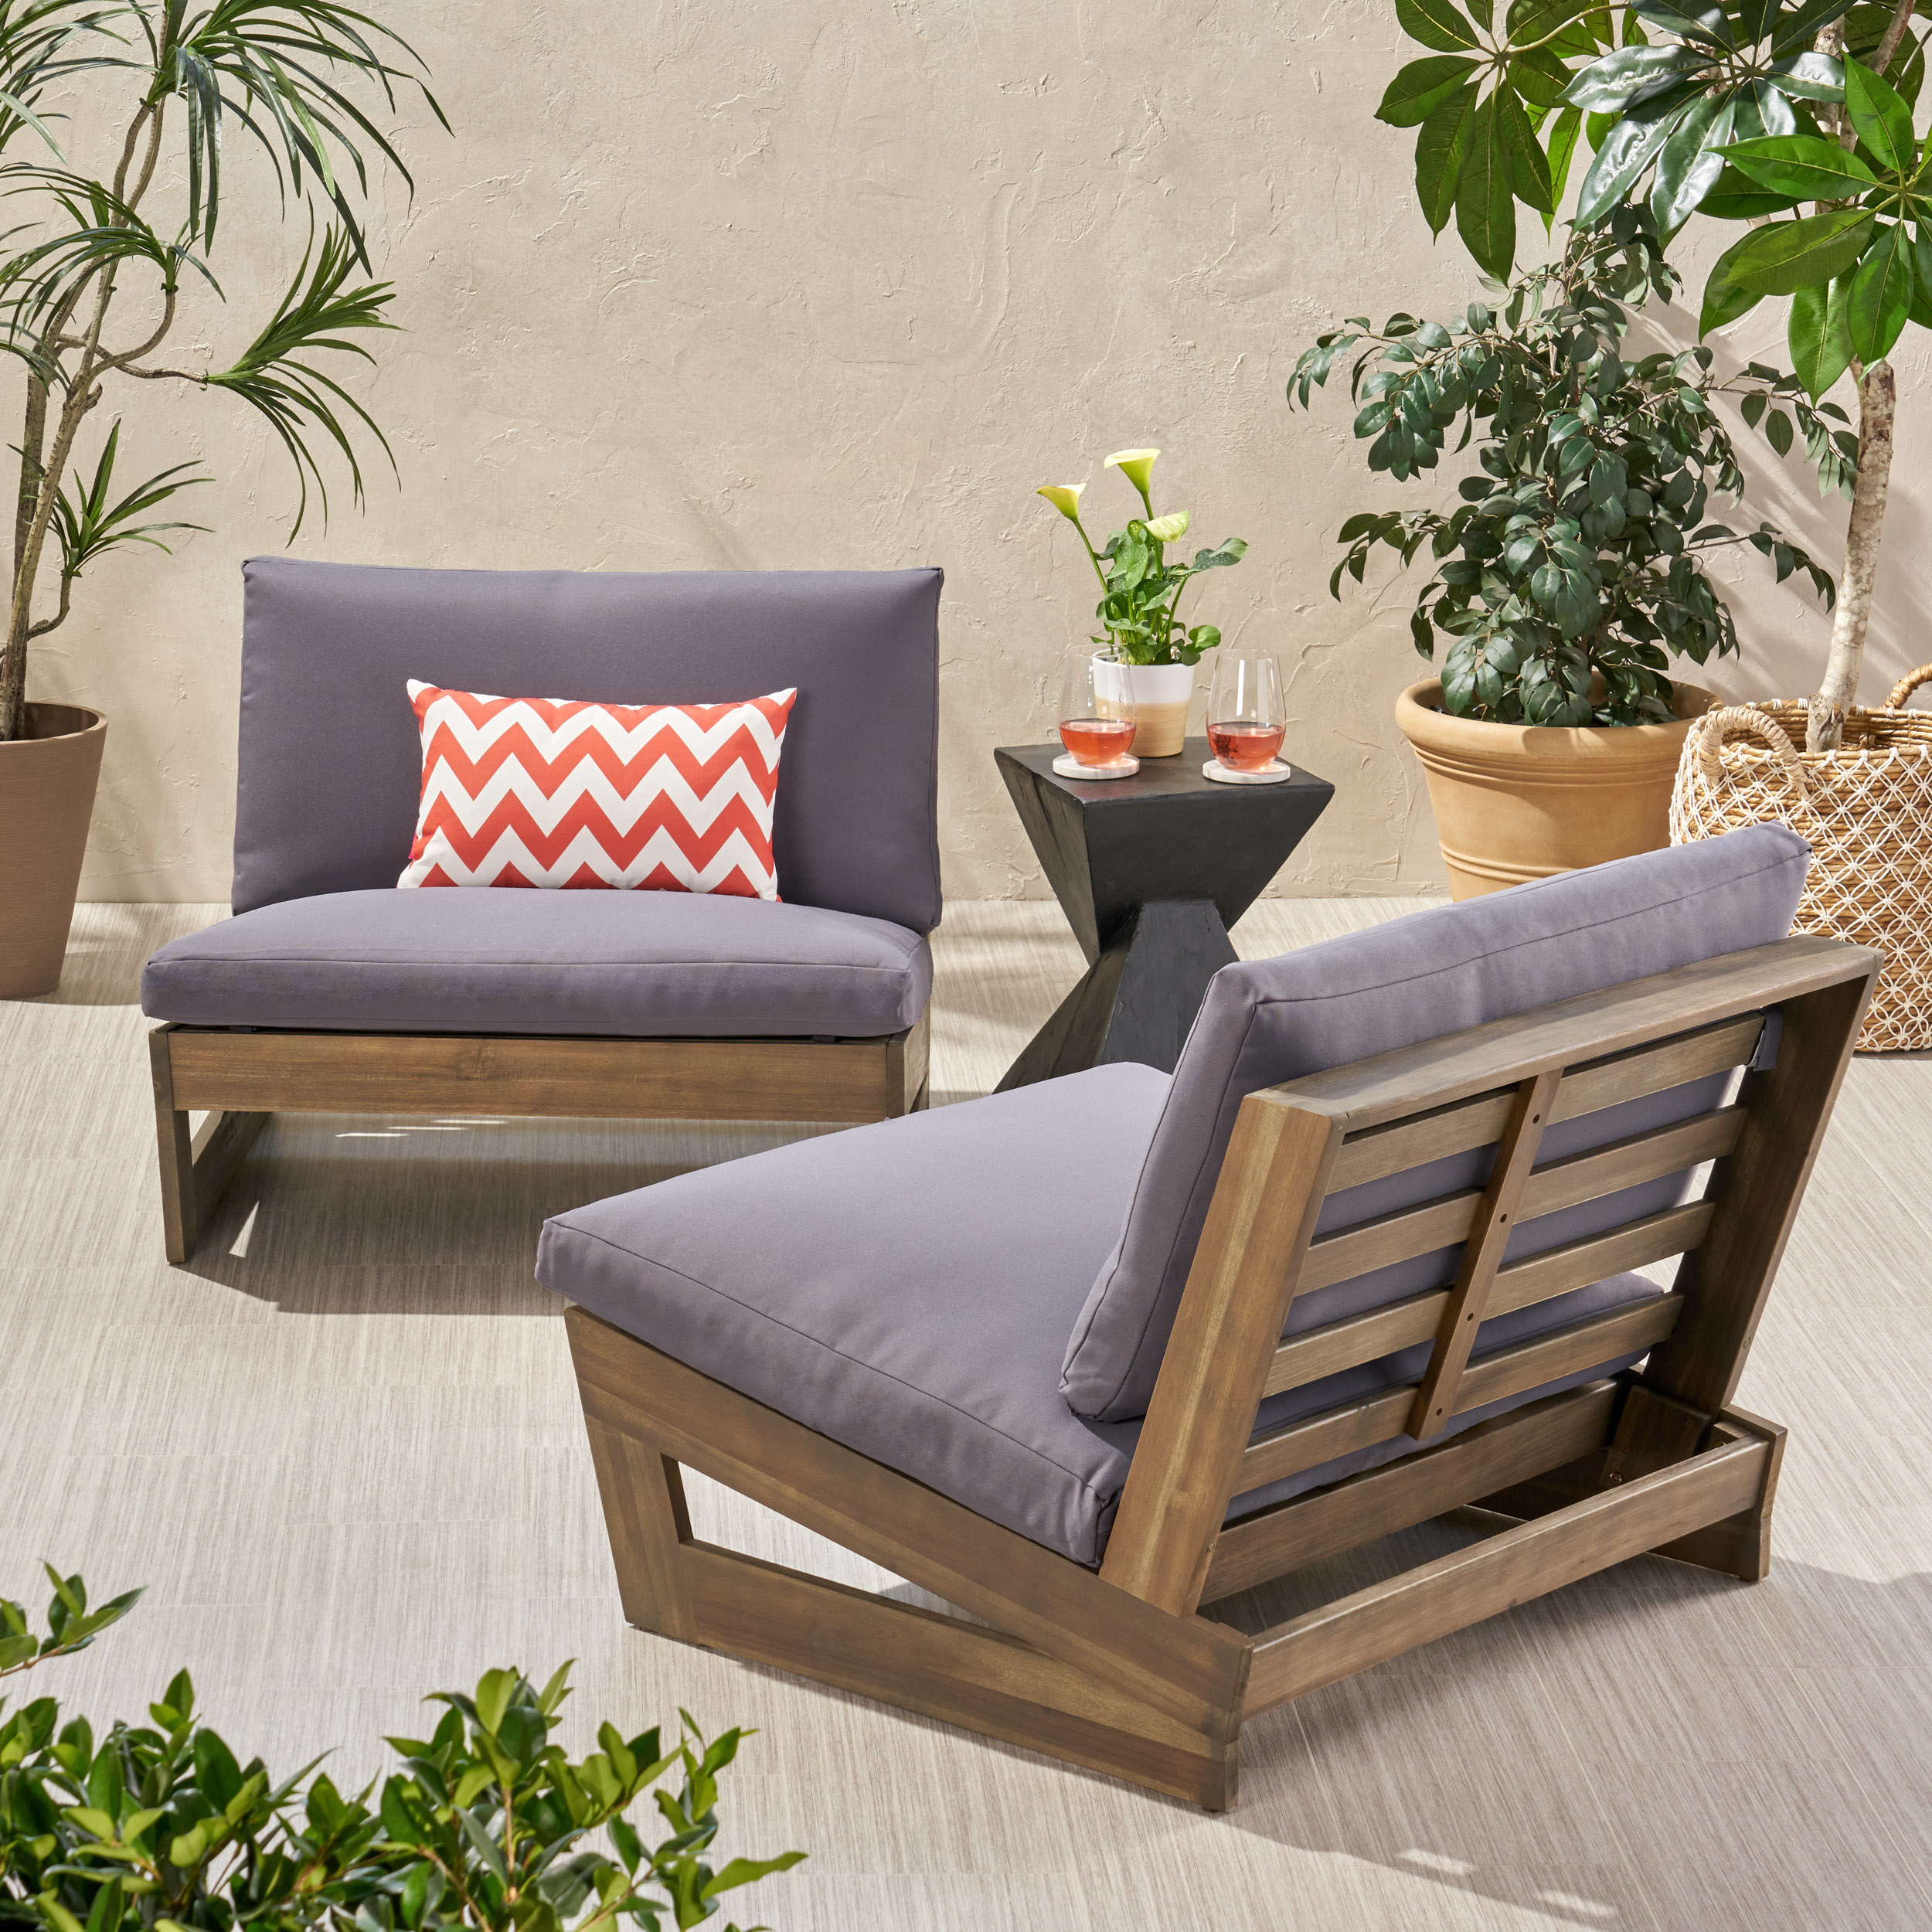 Emma Outdoor Acacia Wood Club Chairs With Cushions (Set Of 2) - Gray Finish, Dark Gray